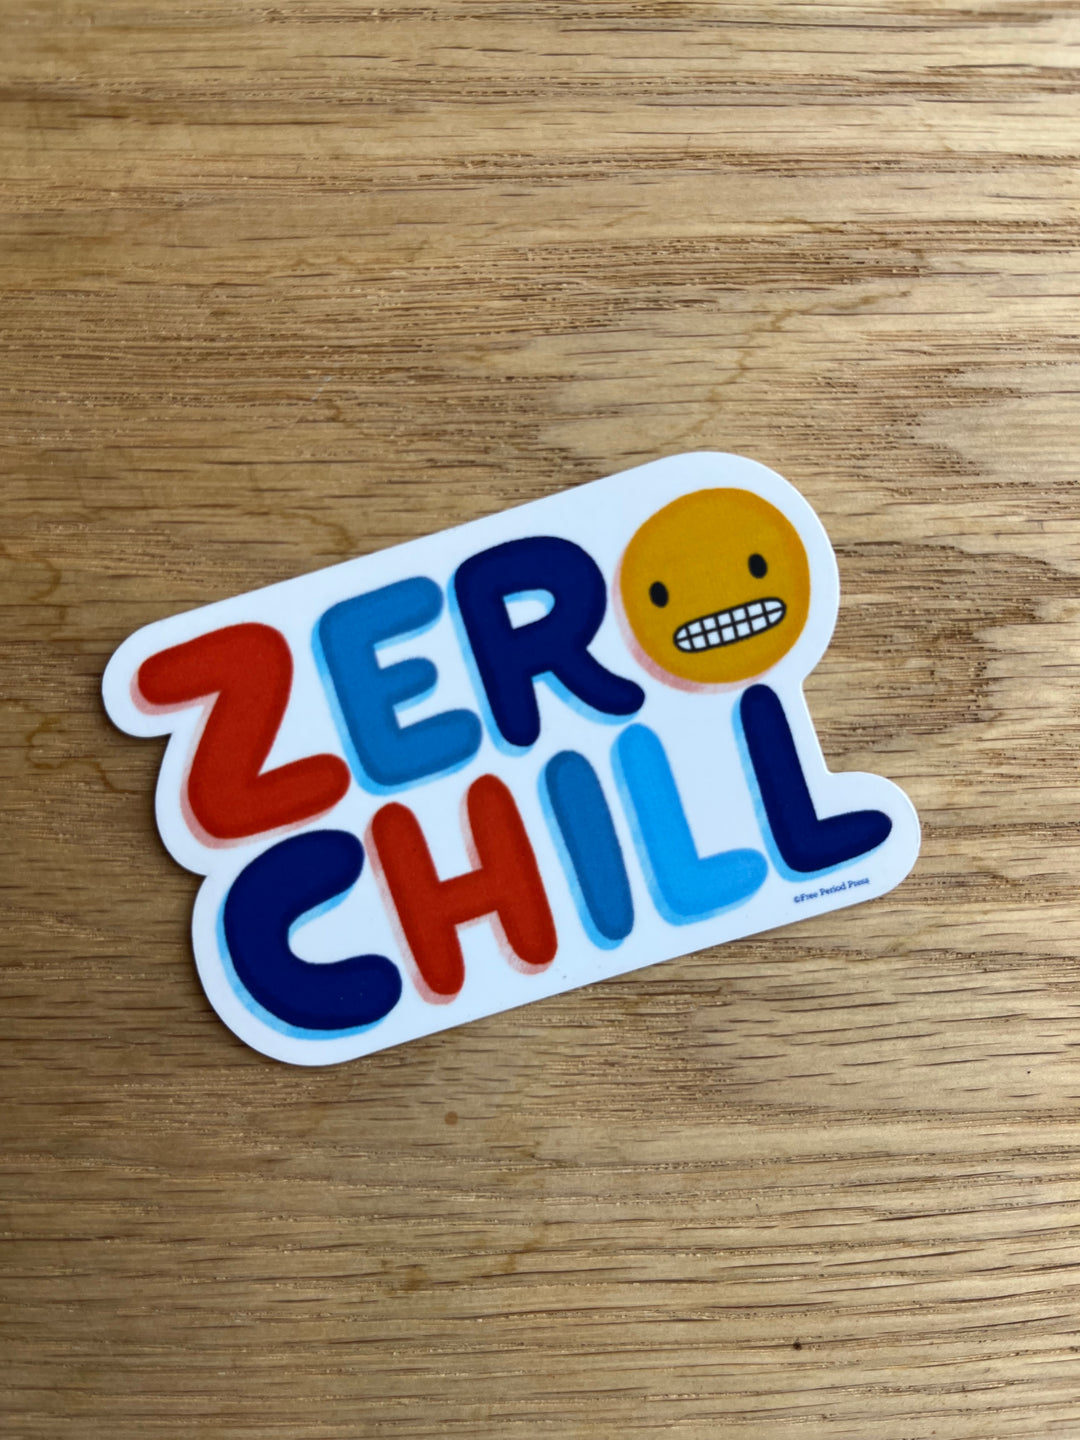 Zero Chill Vinyl Decal Sticker